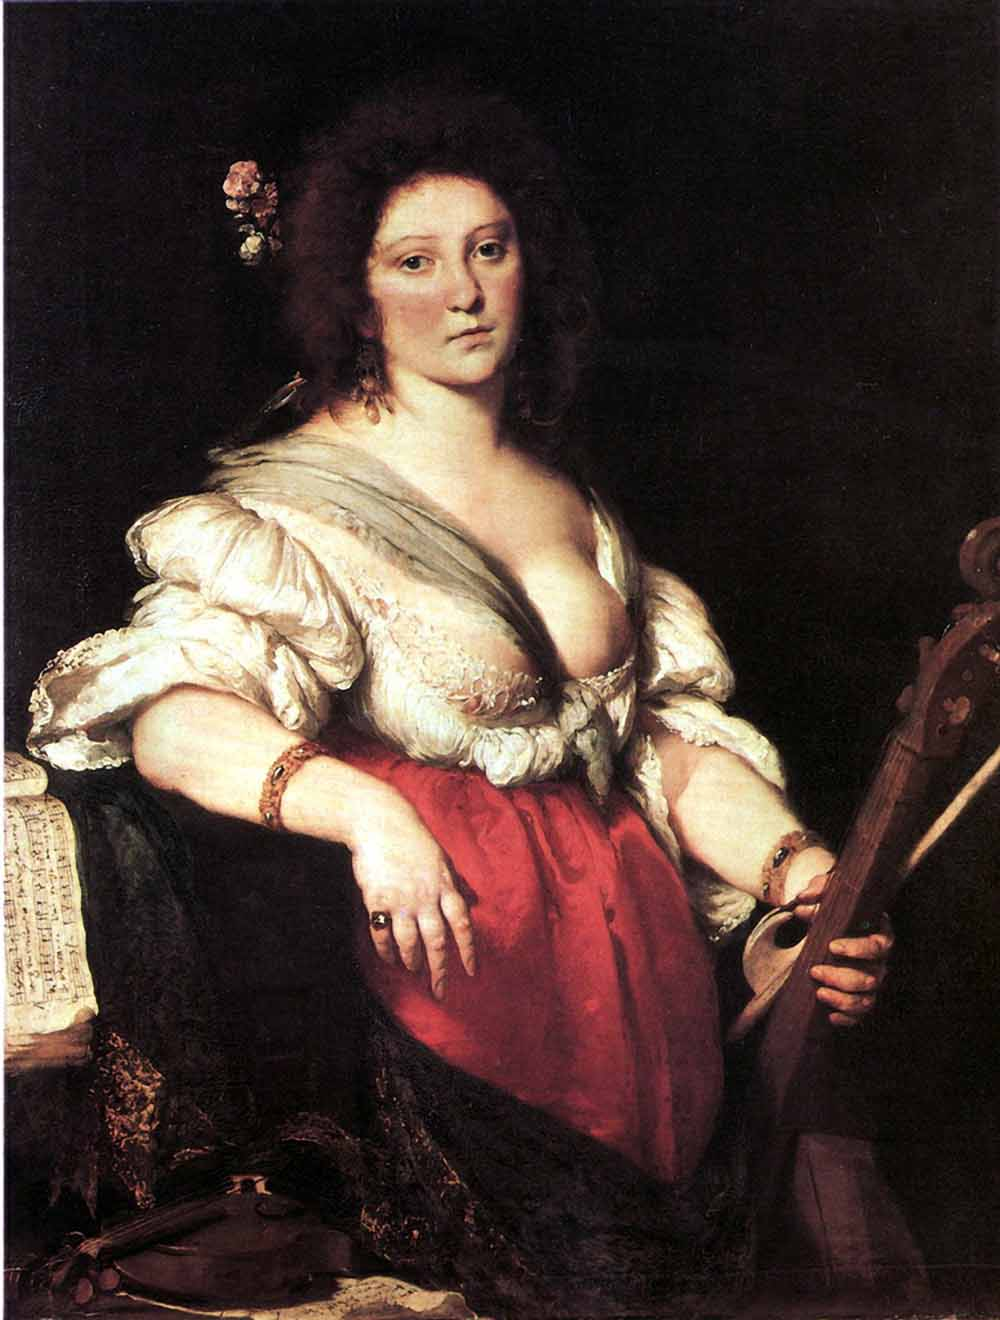 !! Abbildung: Bernardo Strozzi: Viola da gambaspielerin: die Sängerin " " Barbara Strozzi, um 1640, Öl/Leinand, 126 cm x 99 cm, Dresden,!! Gemäldegalerie, Inv.Nr.